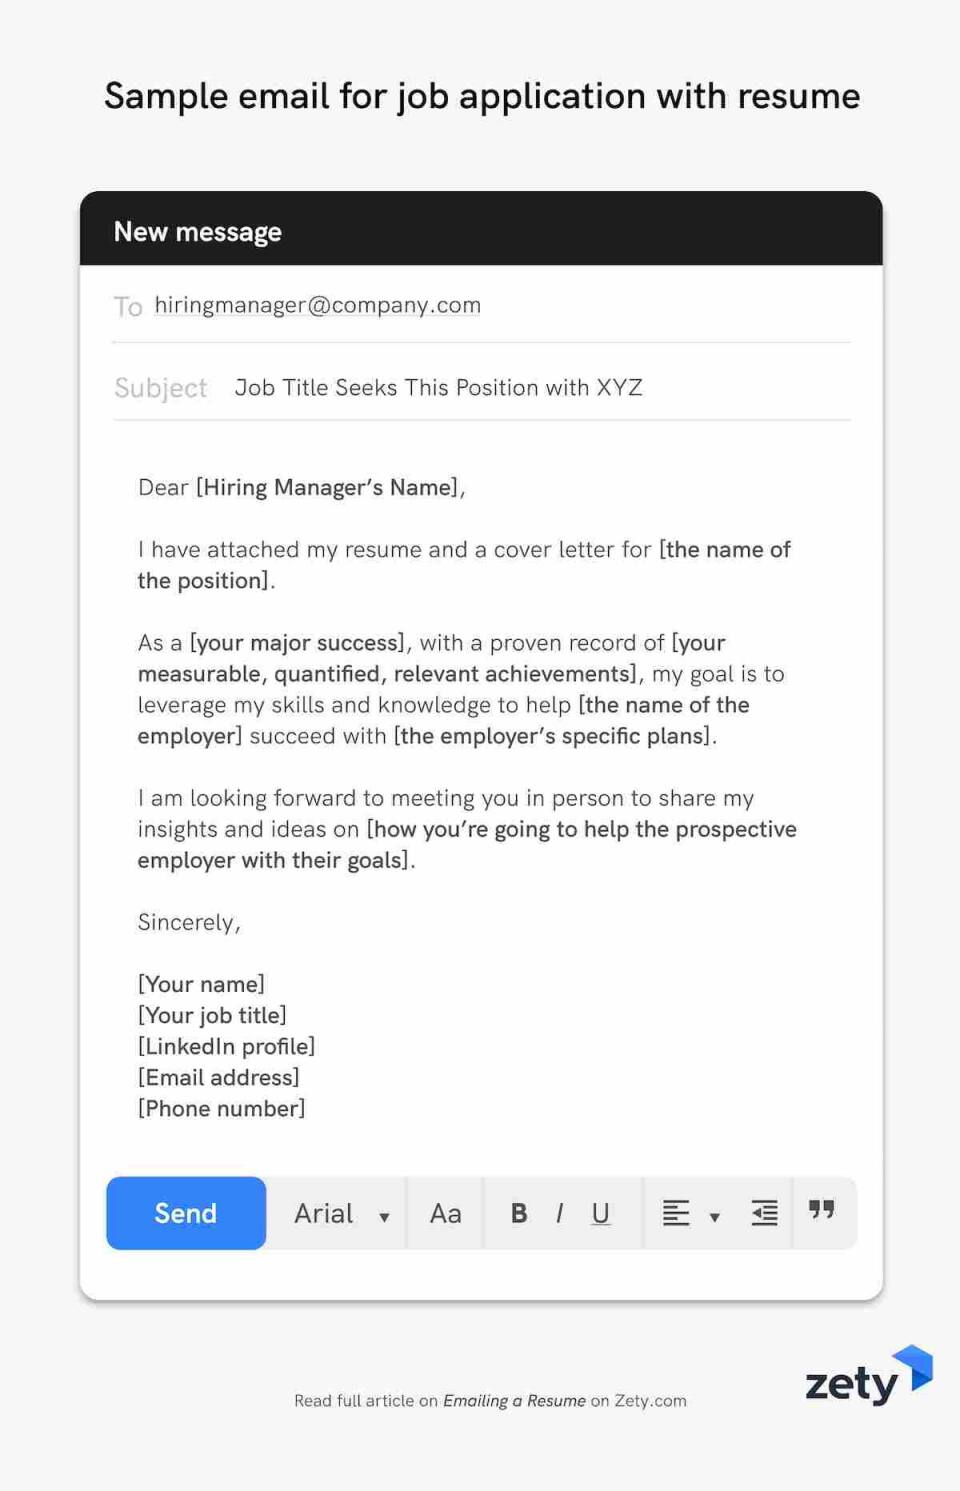 Email body job application sample